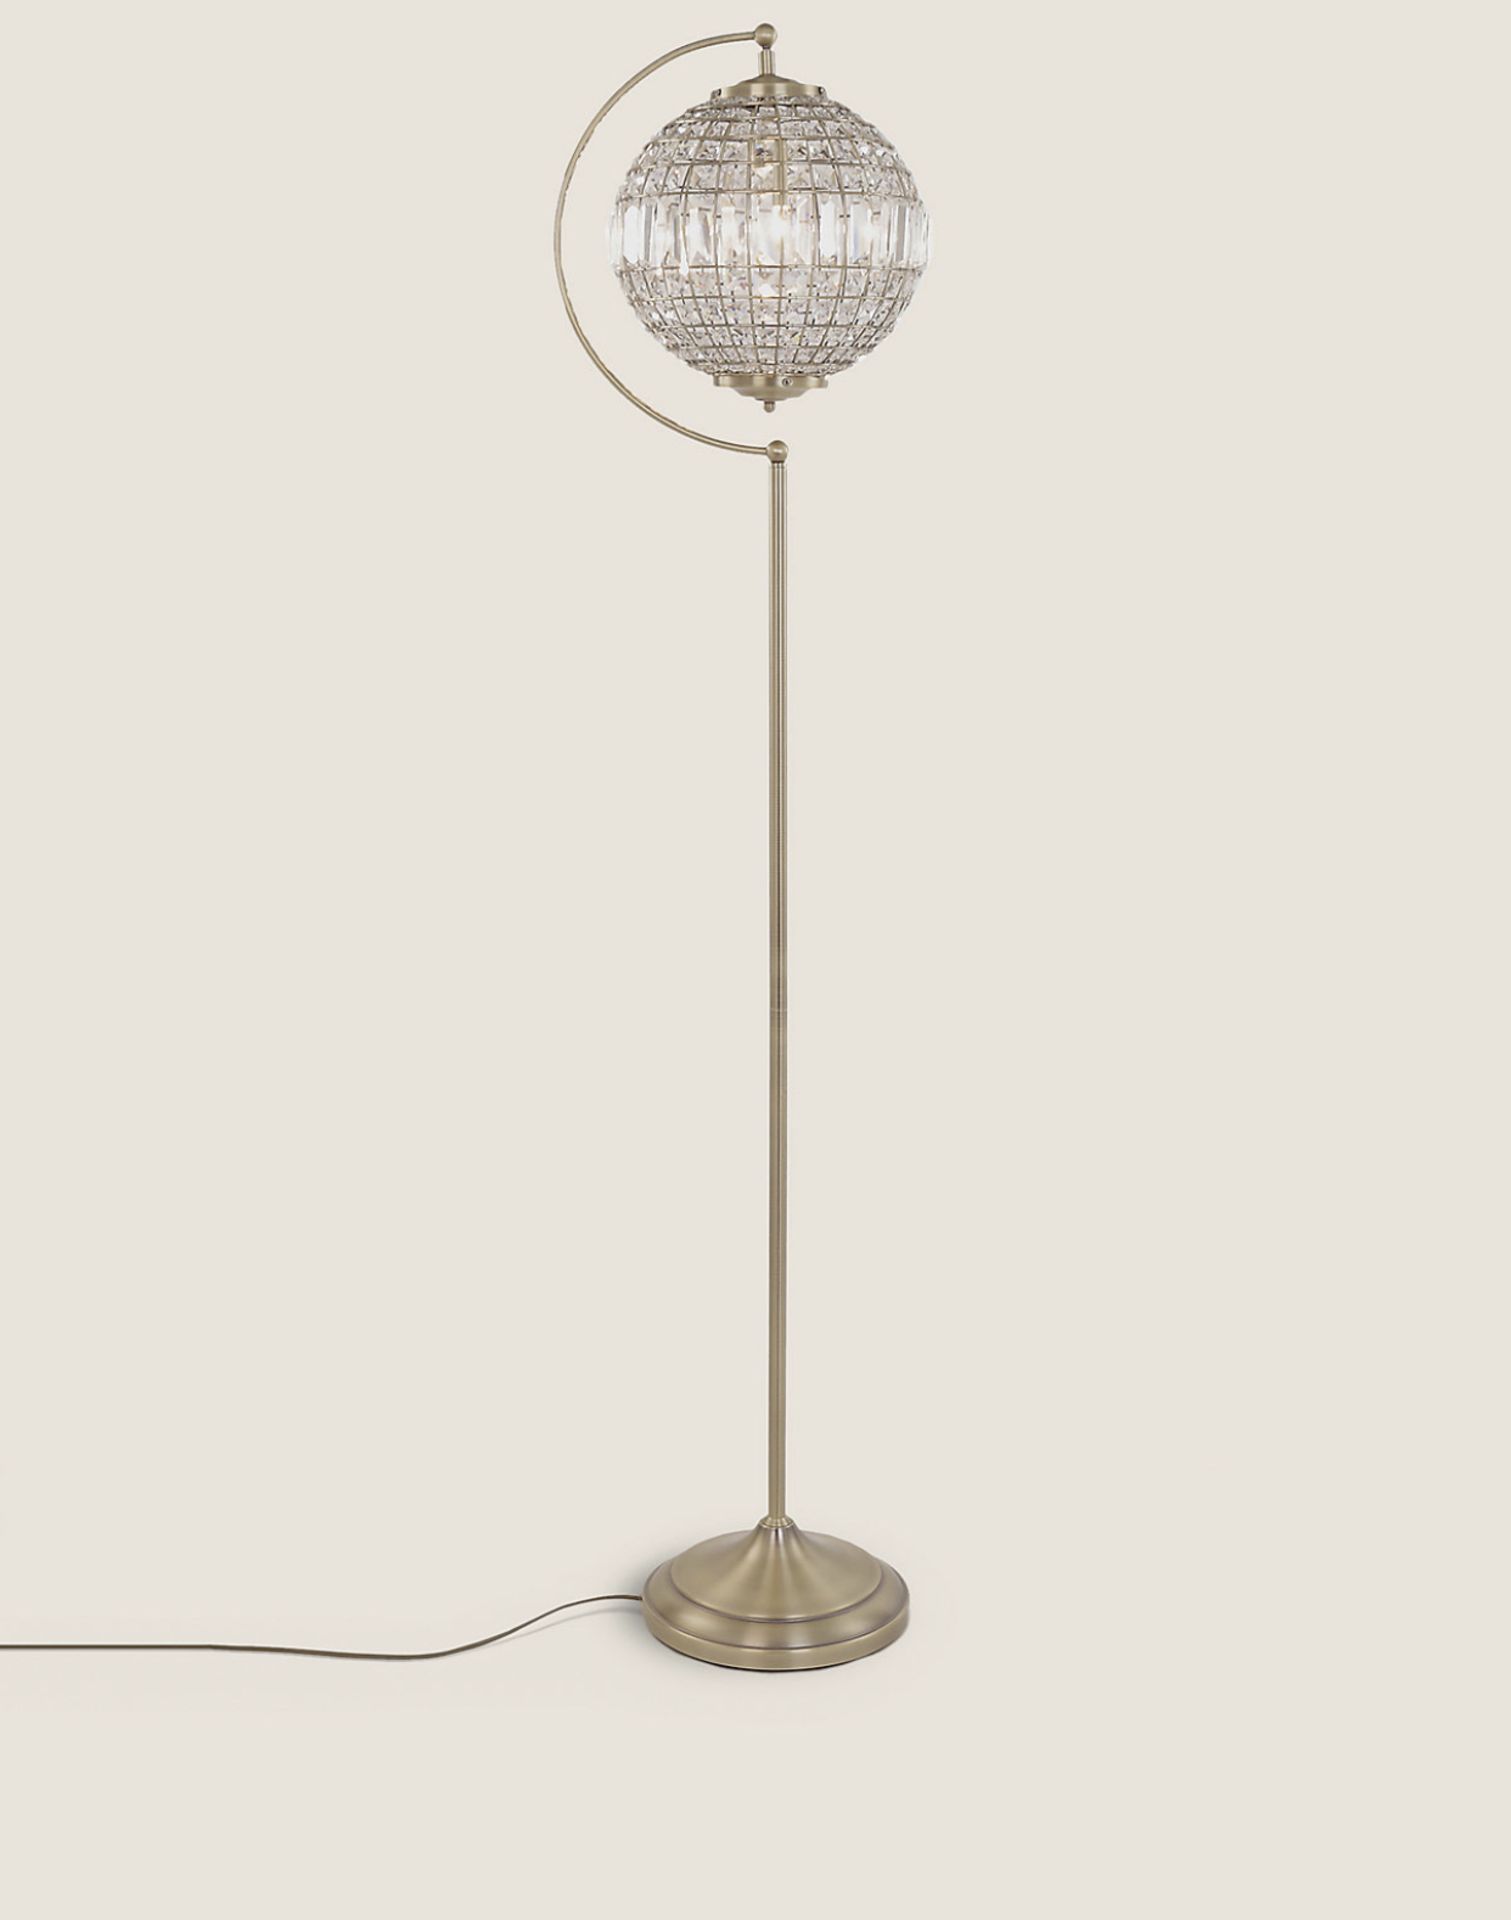 Luxurious Gem Ball Floor Lamp, Antique Brass RRP £199 - Image 2 of 3